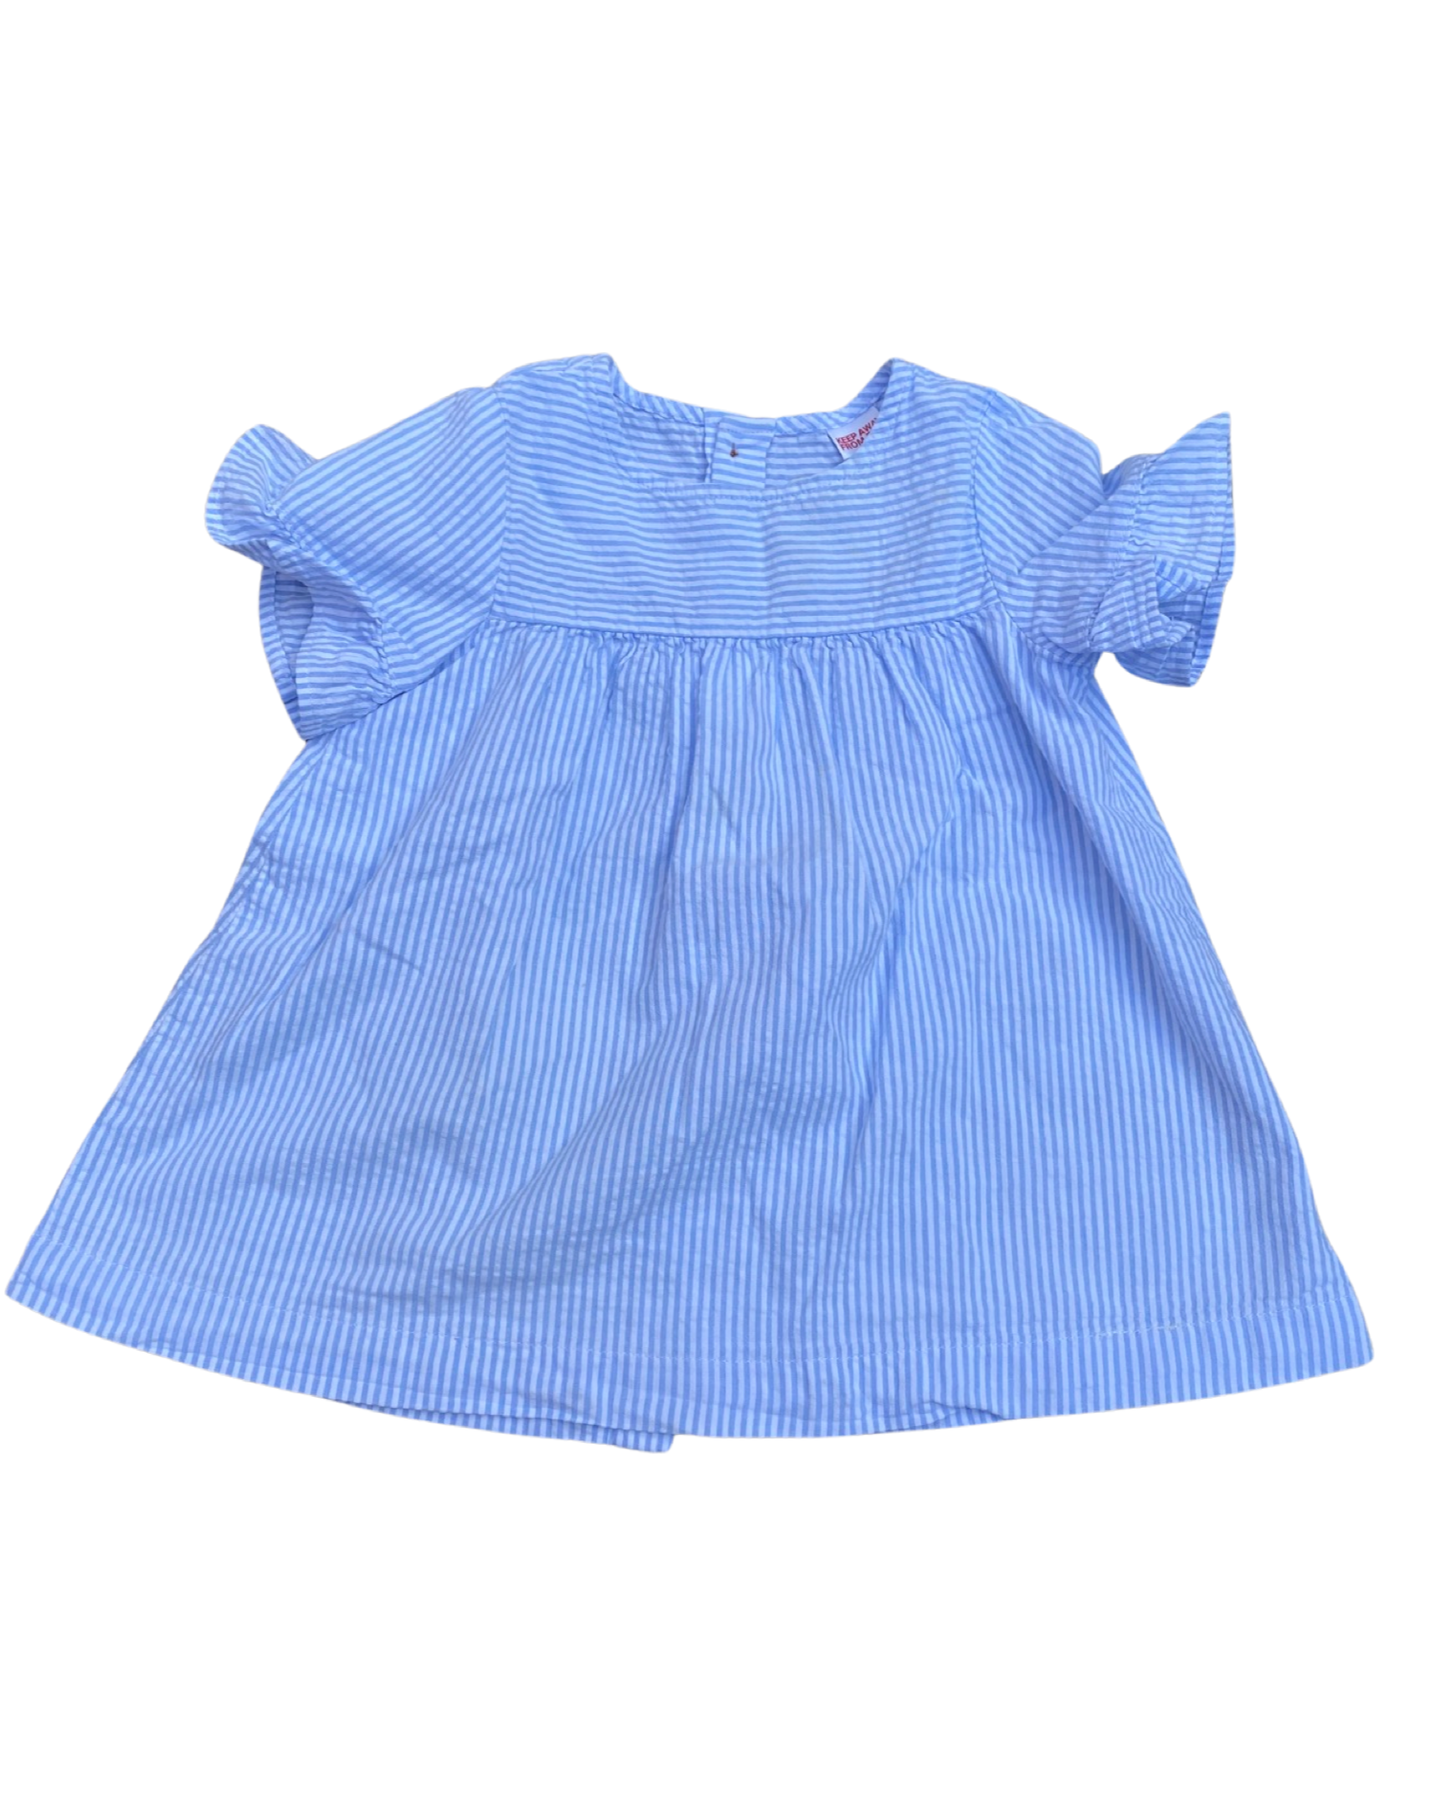 Baby Zara striped cotton dress (9-12mths)